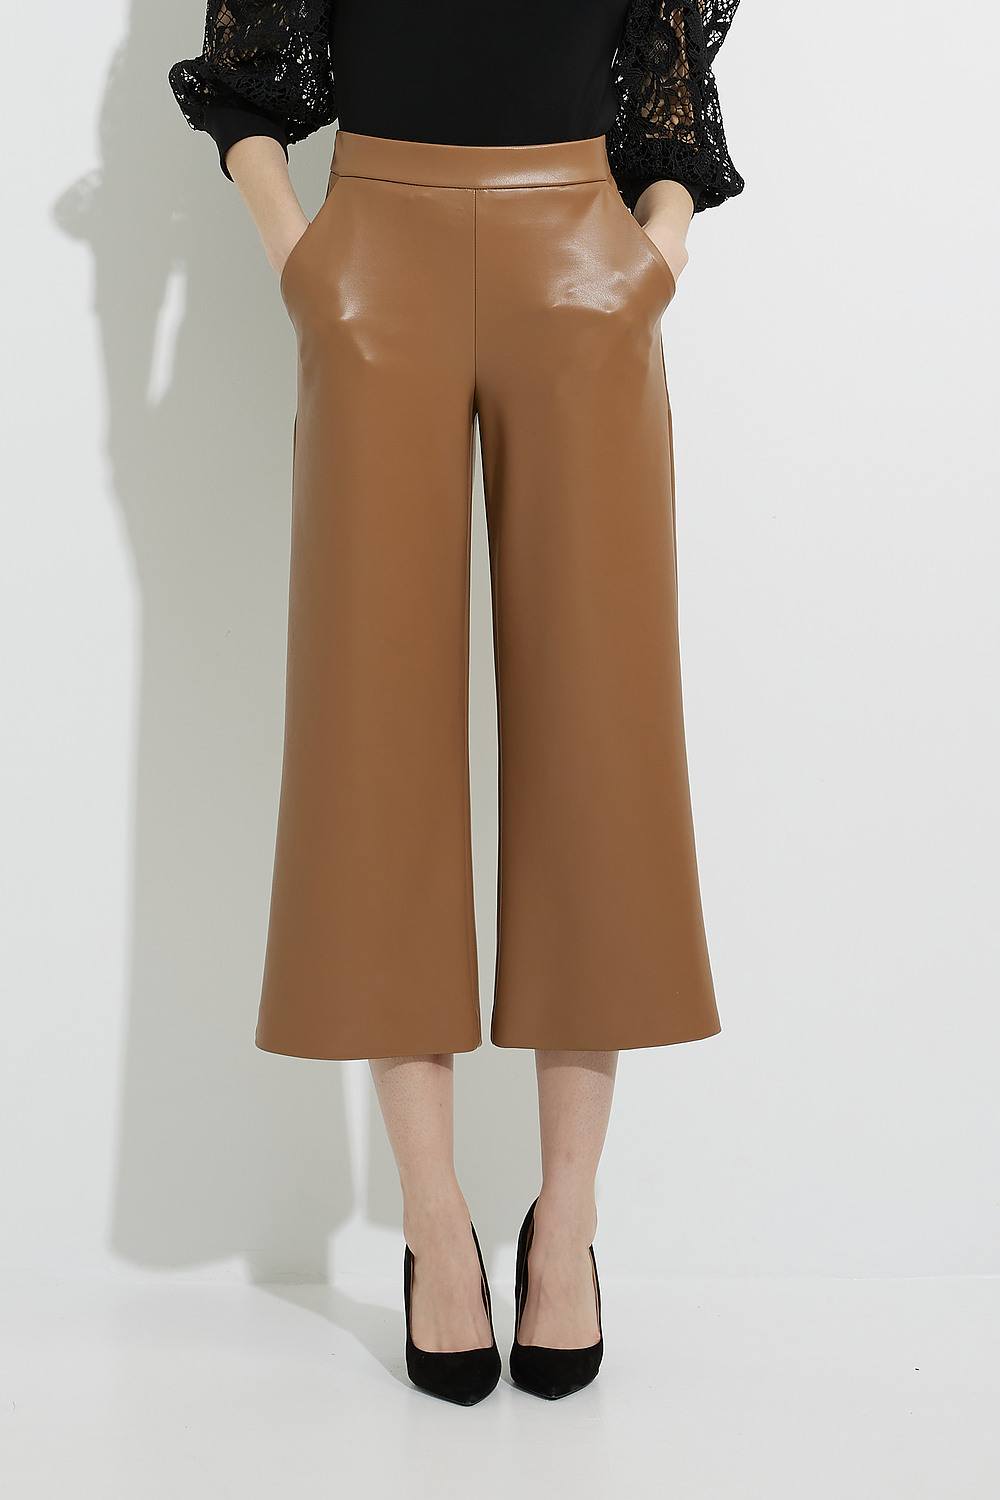 Joseph Ribkoff Faux Leather Flared Pants Style 224016. Nutmeg